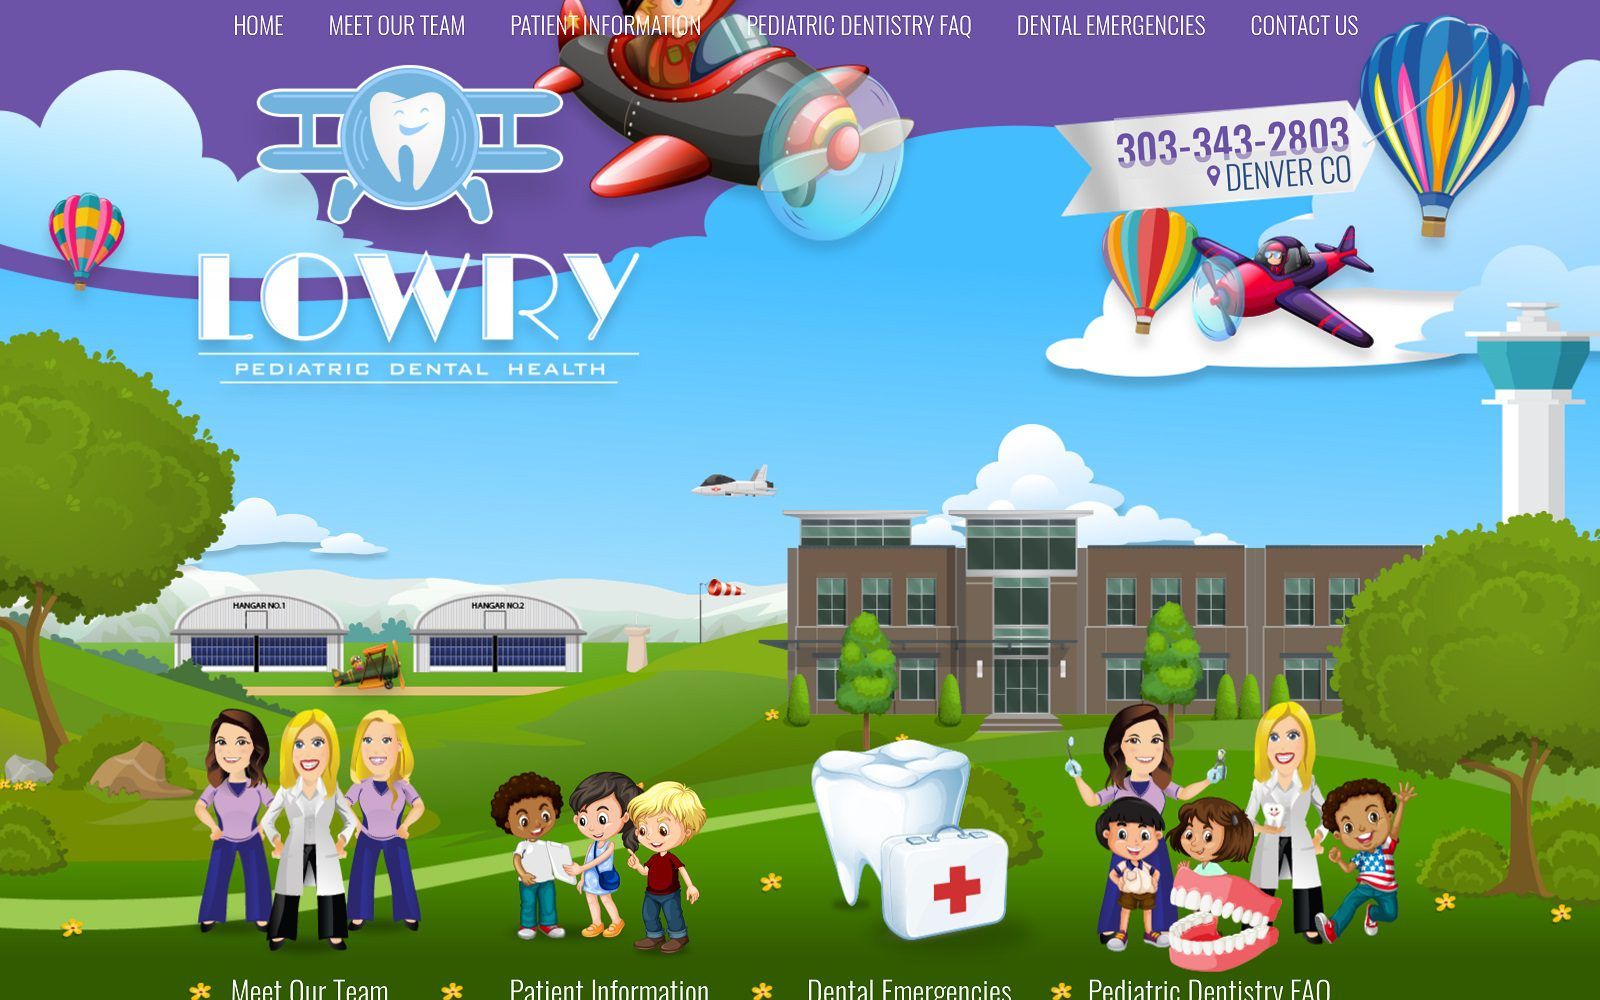 The screenshot of lowry pediatric dental health website